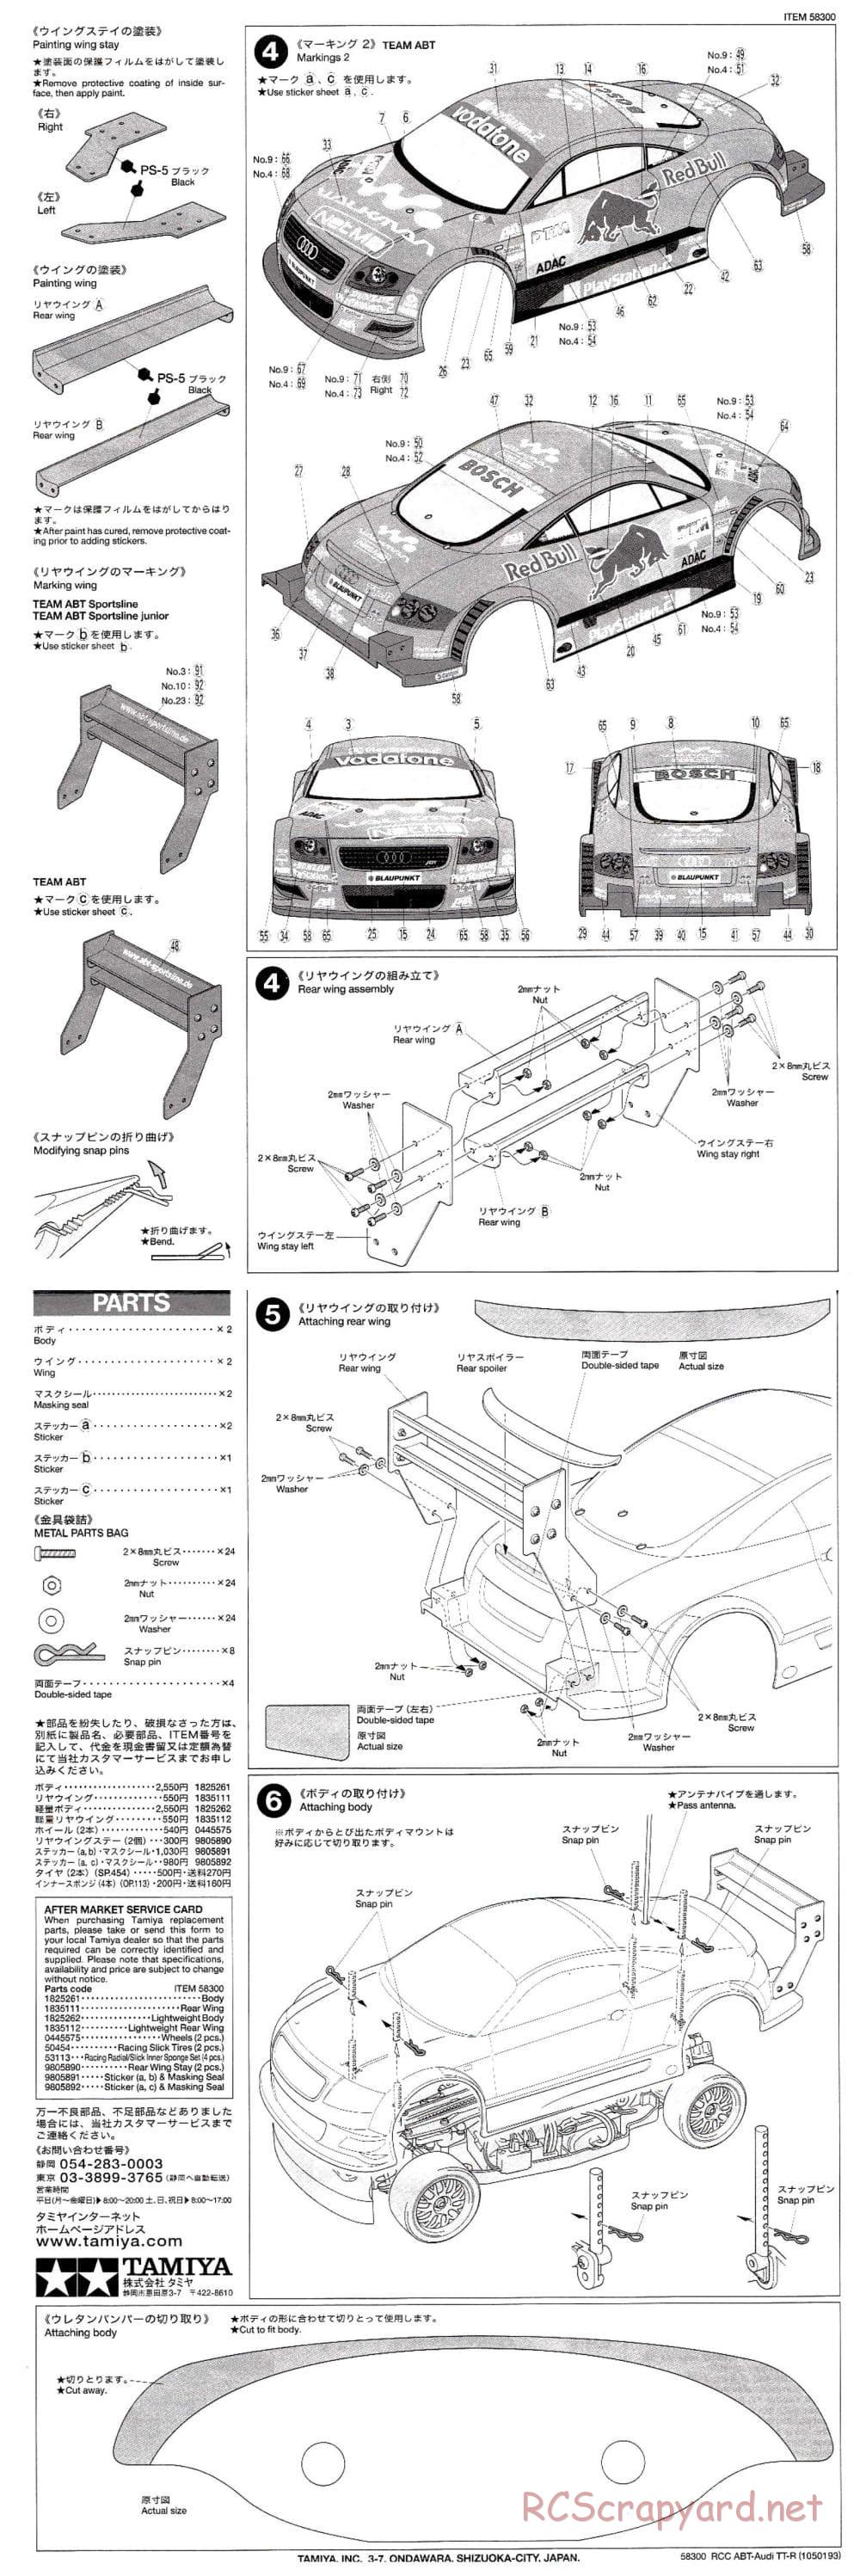 Tamiya - ABT Audi TT-R - TA04-SS Chassis - Body Manual - Page 2